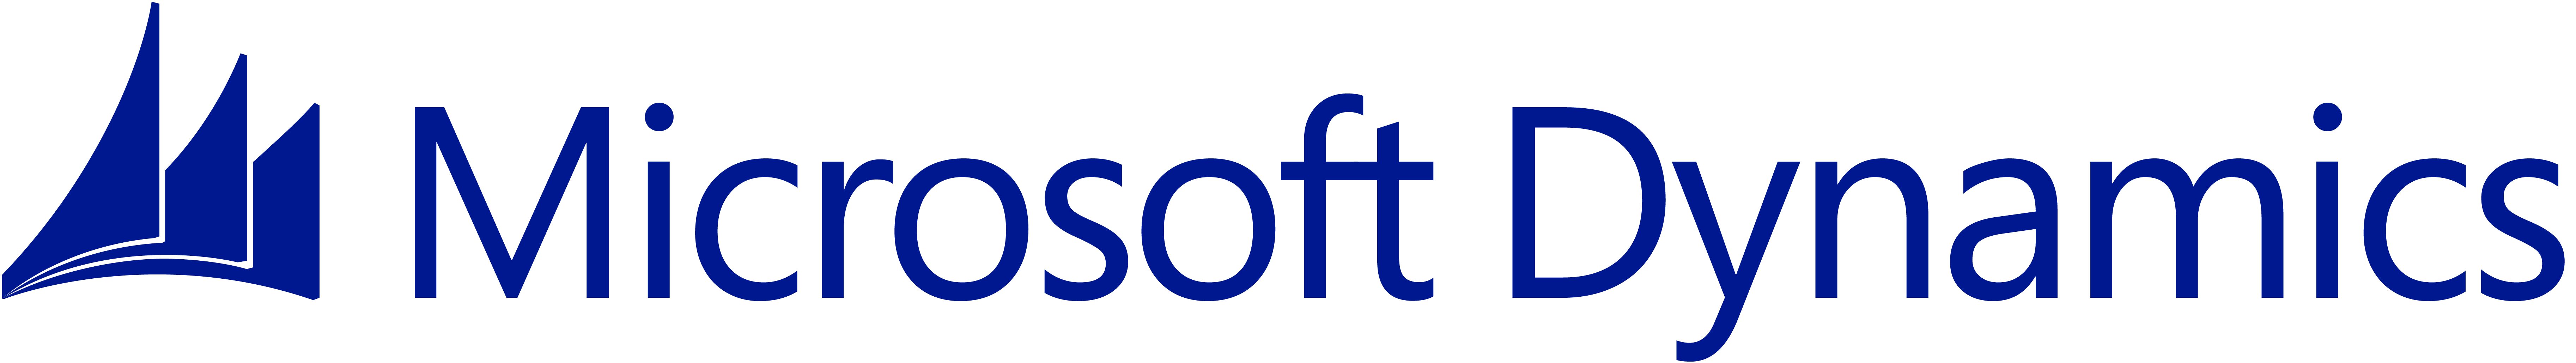 Microsoft Dynamics Logo - Management Training, Business Training and IT Training